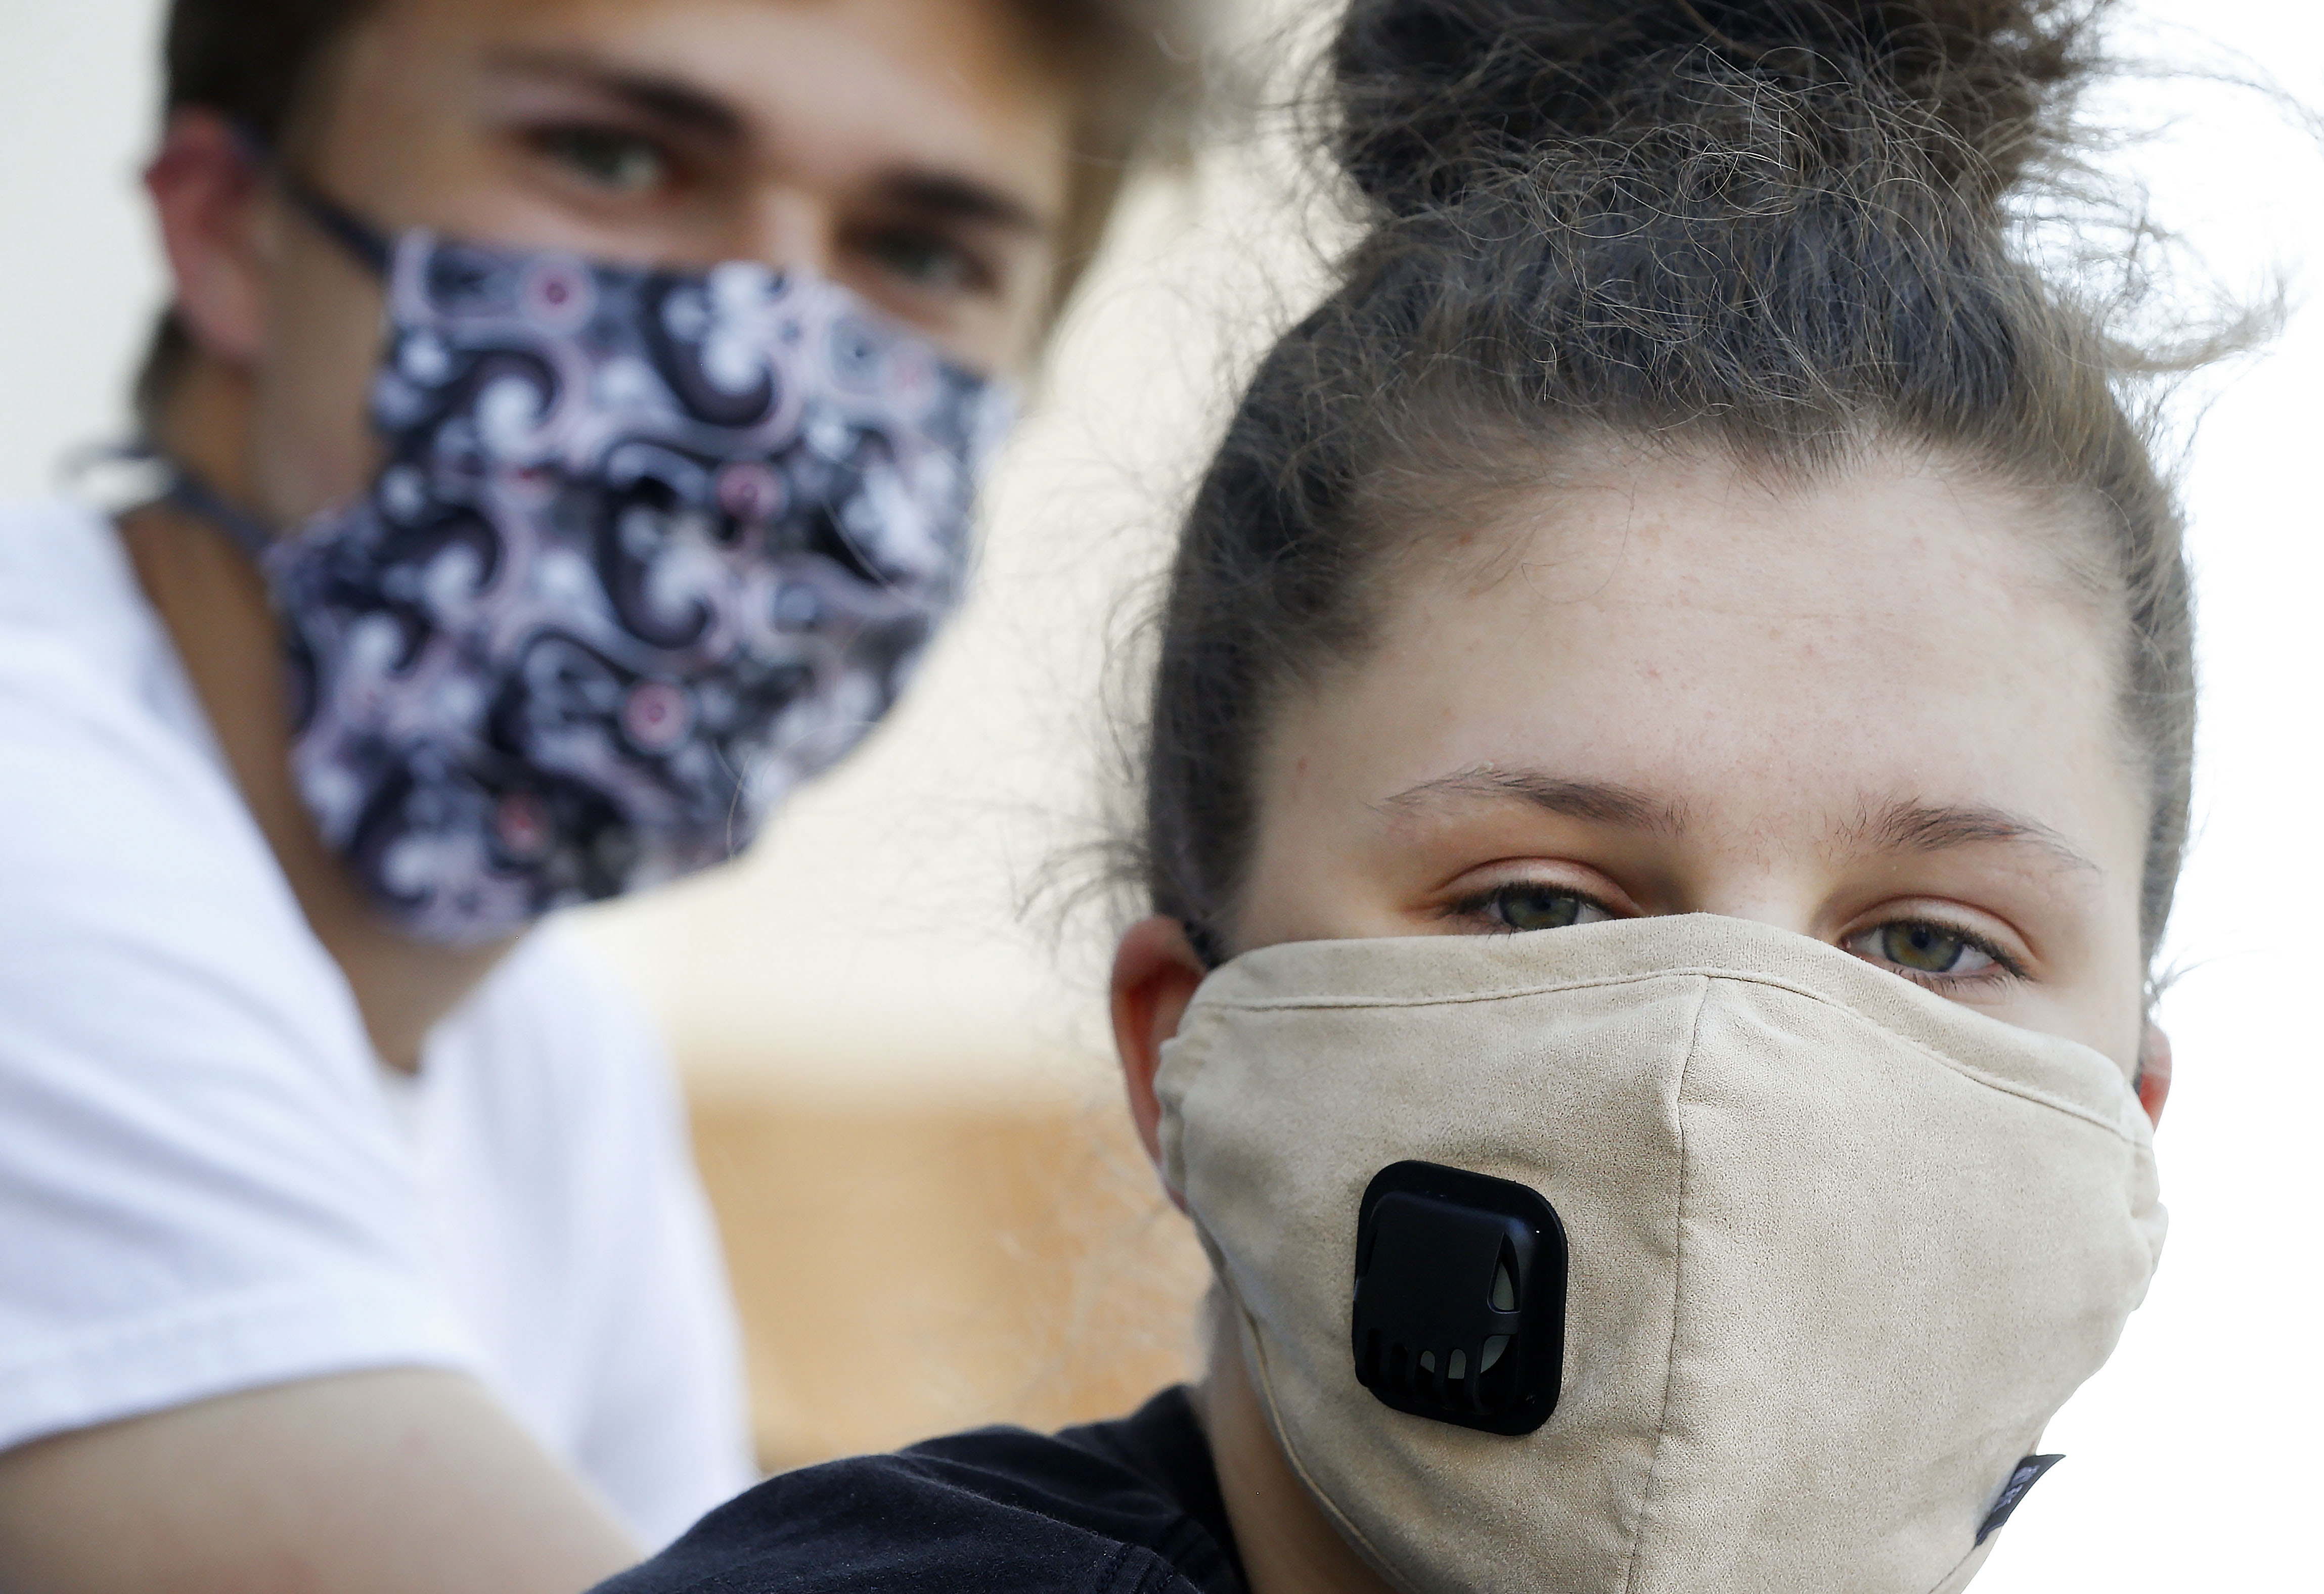 Micah Goldstein, 18, left, and his sister, Liana Pruyn Goldstein, 17, wear masks in Salt Lake City.